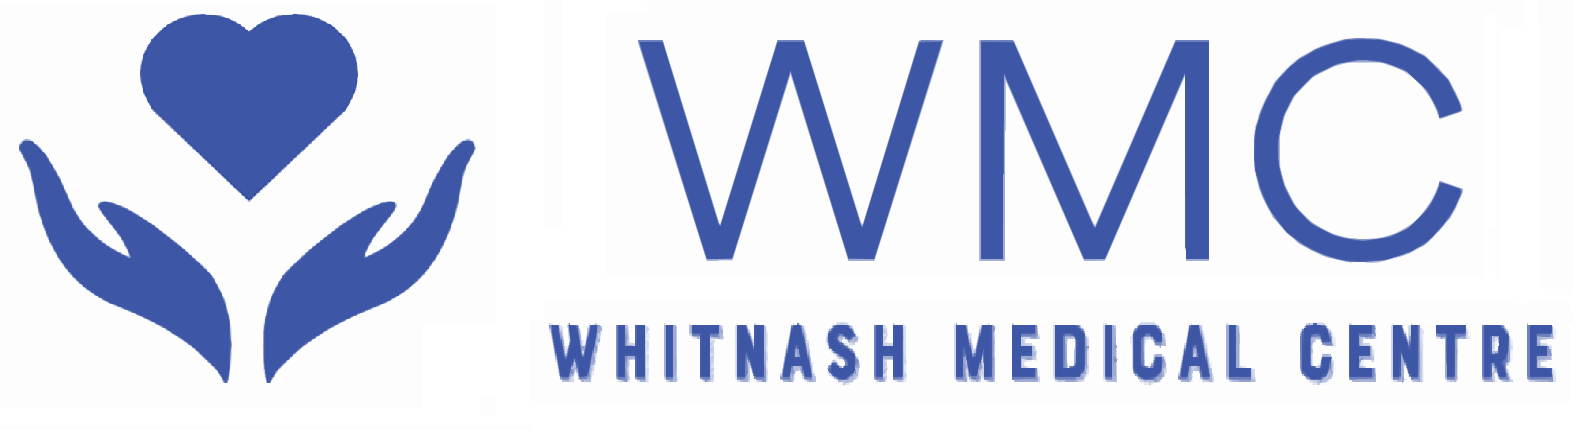 Whitnash Medical Centre